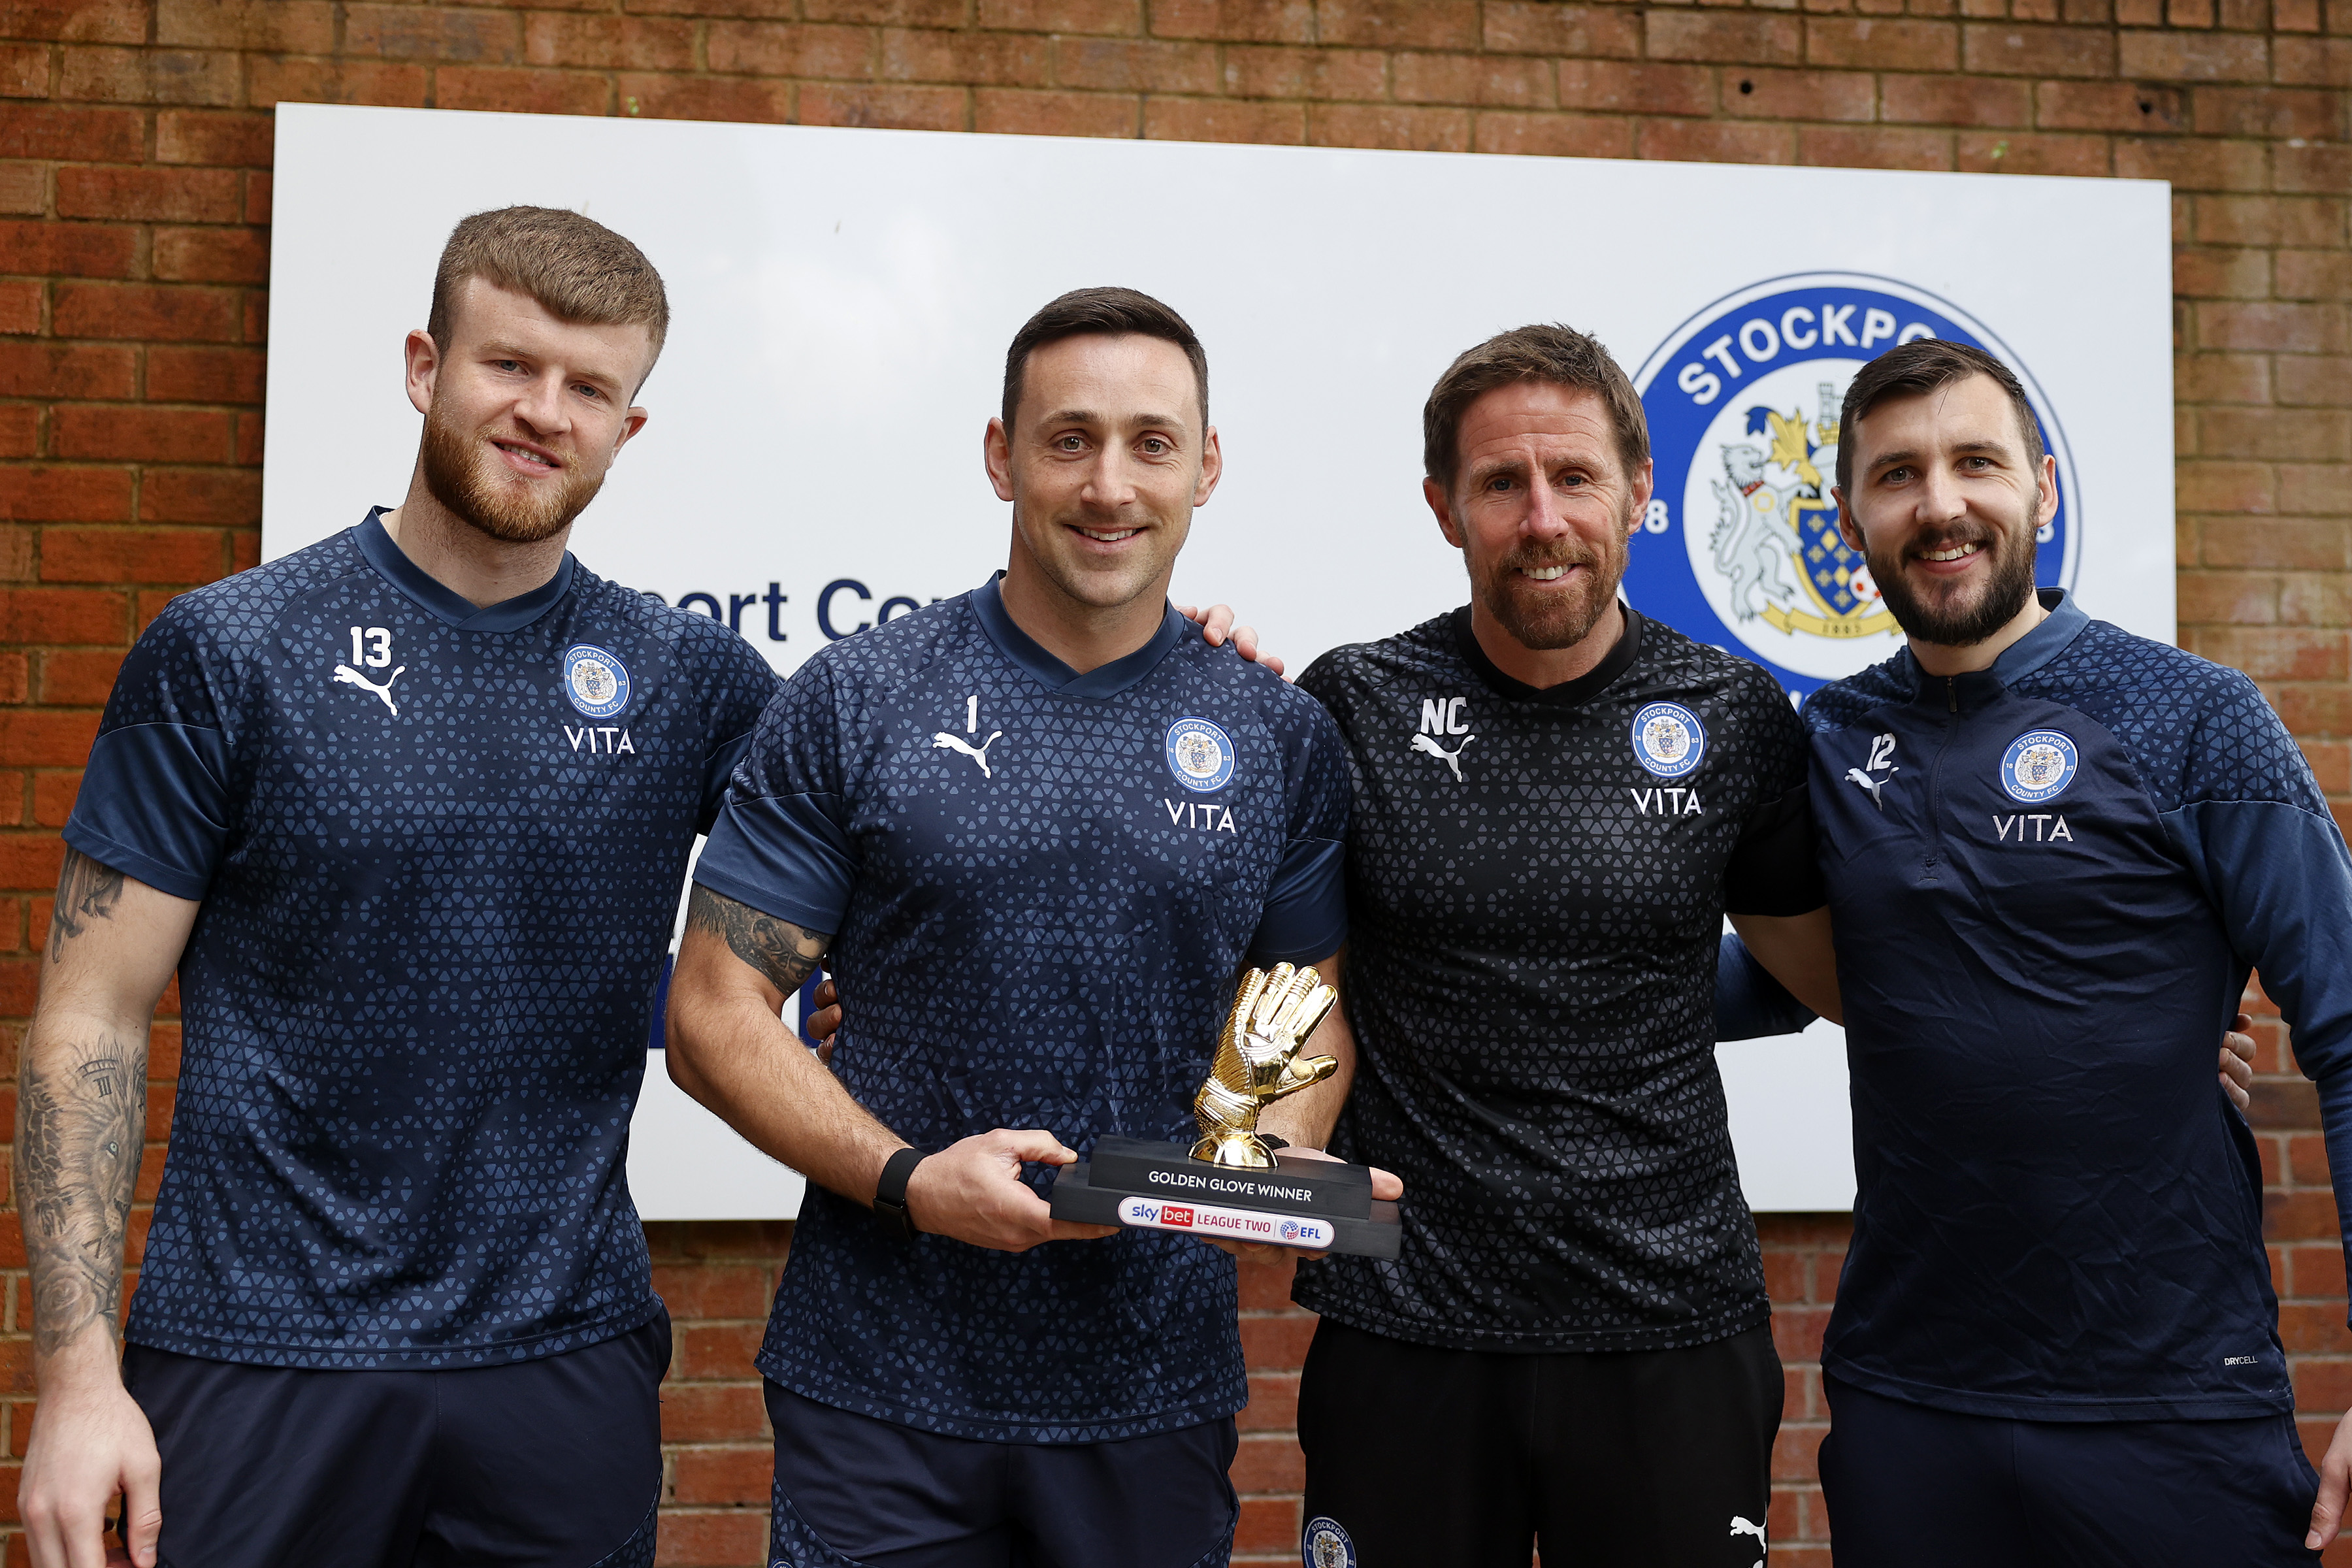 Stockport County goalkeeper Ben Hinchliffe wins League Two Golden Glove award